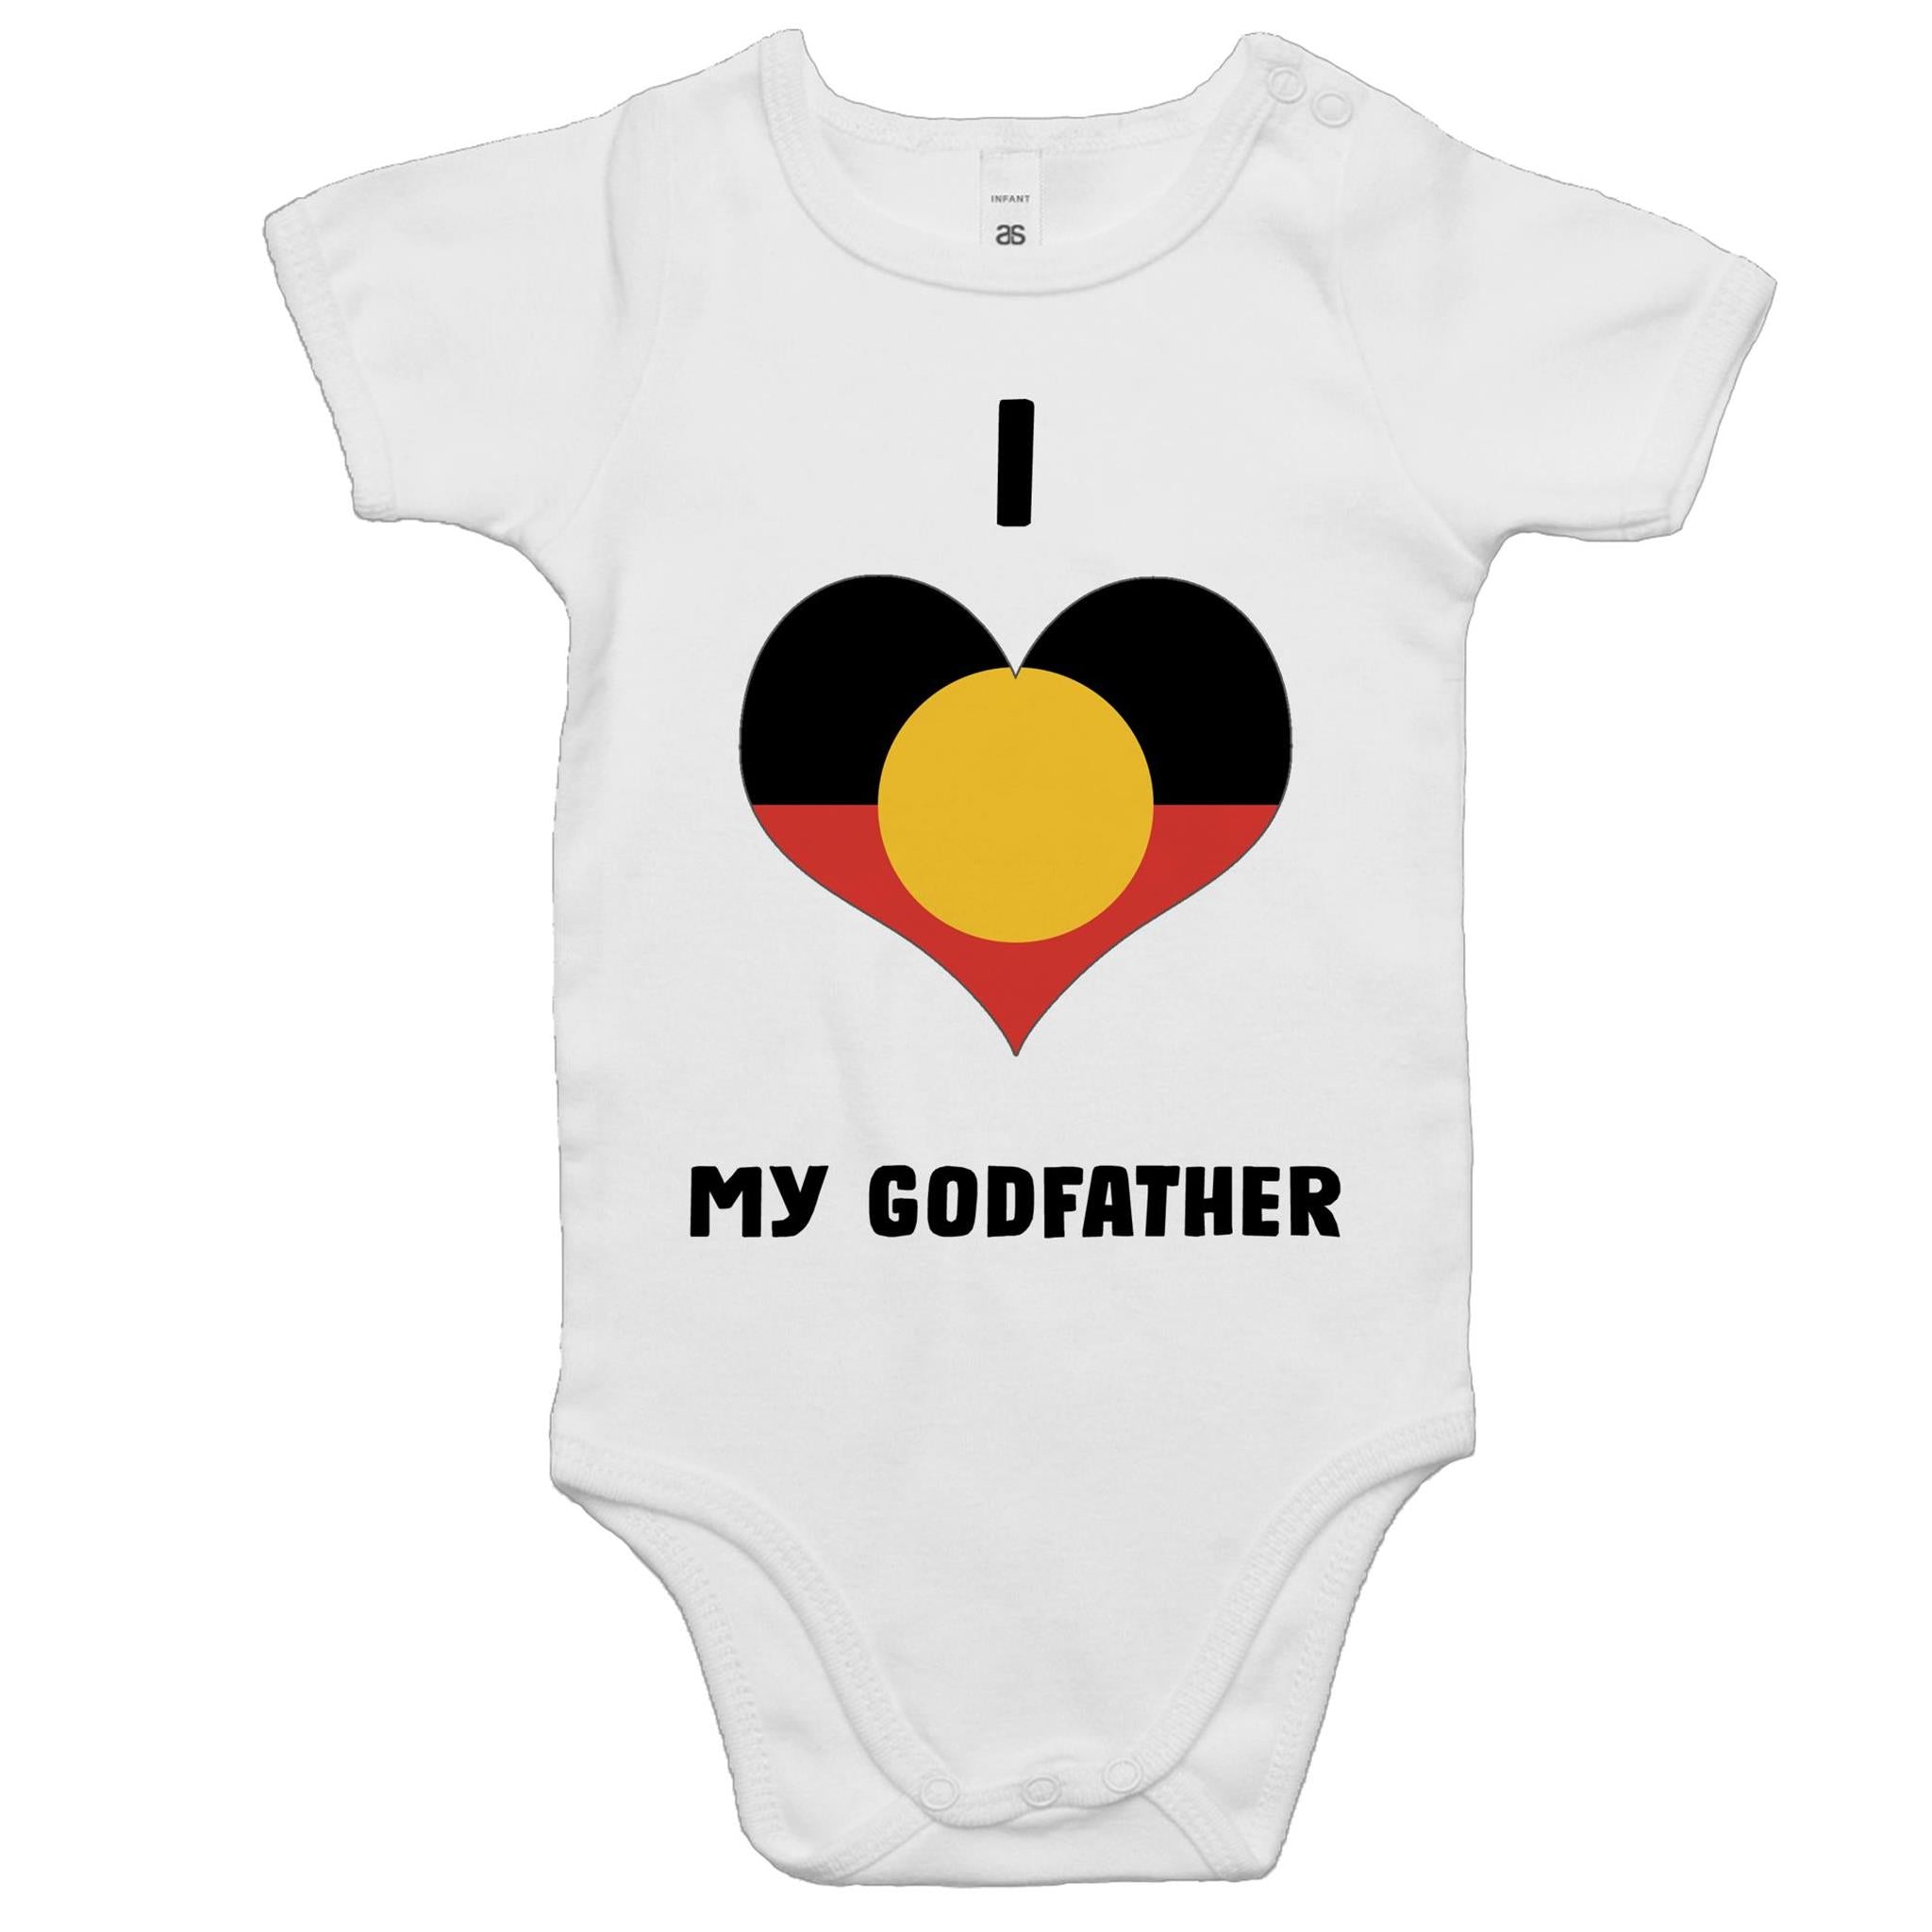 'I Love My Godfather' Romper - Black